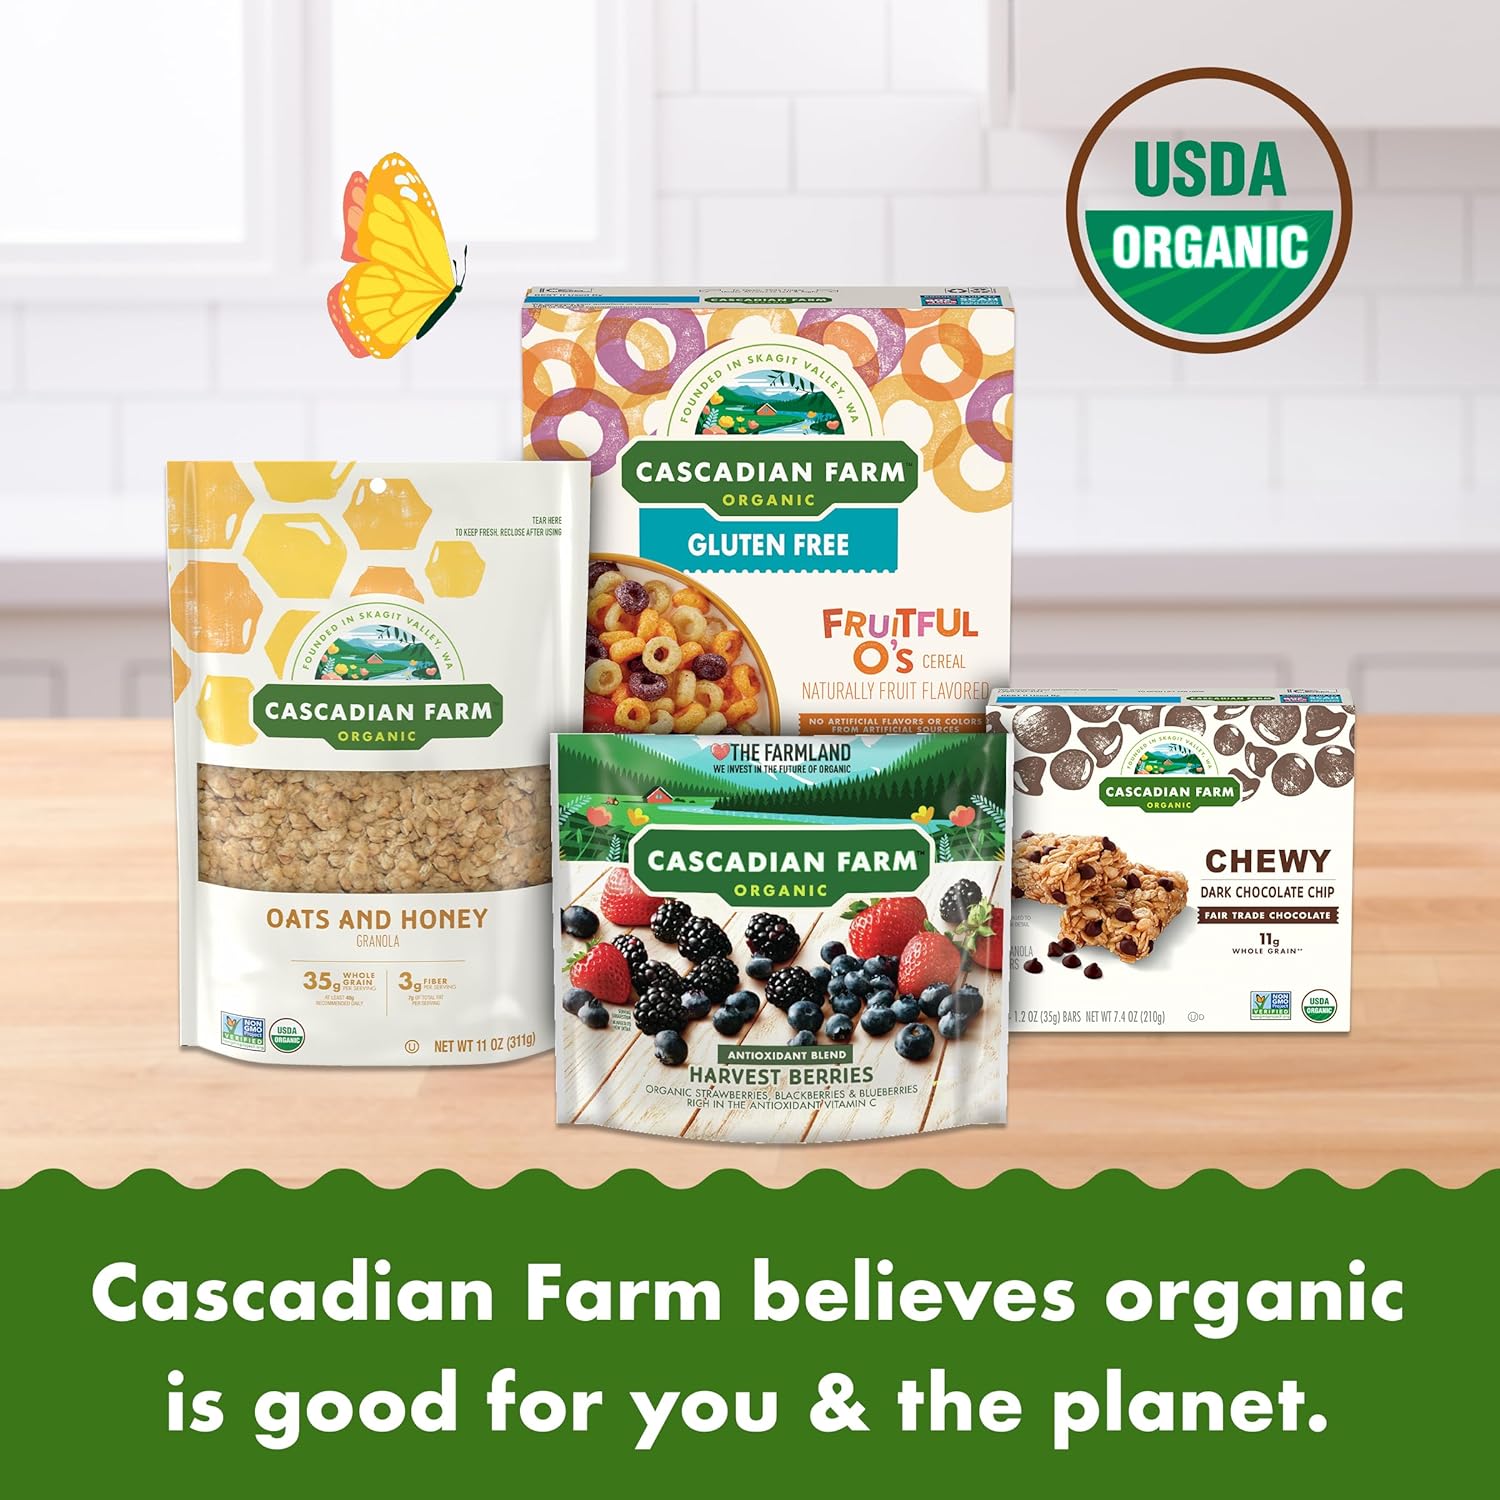 Cascadian Farm Organic Fruitful O's Cereal, Gluten Free, 10.2 oz. : Breakfast Foods : Everything Else